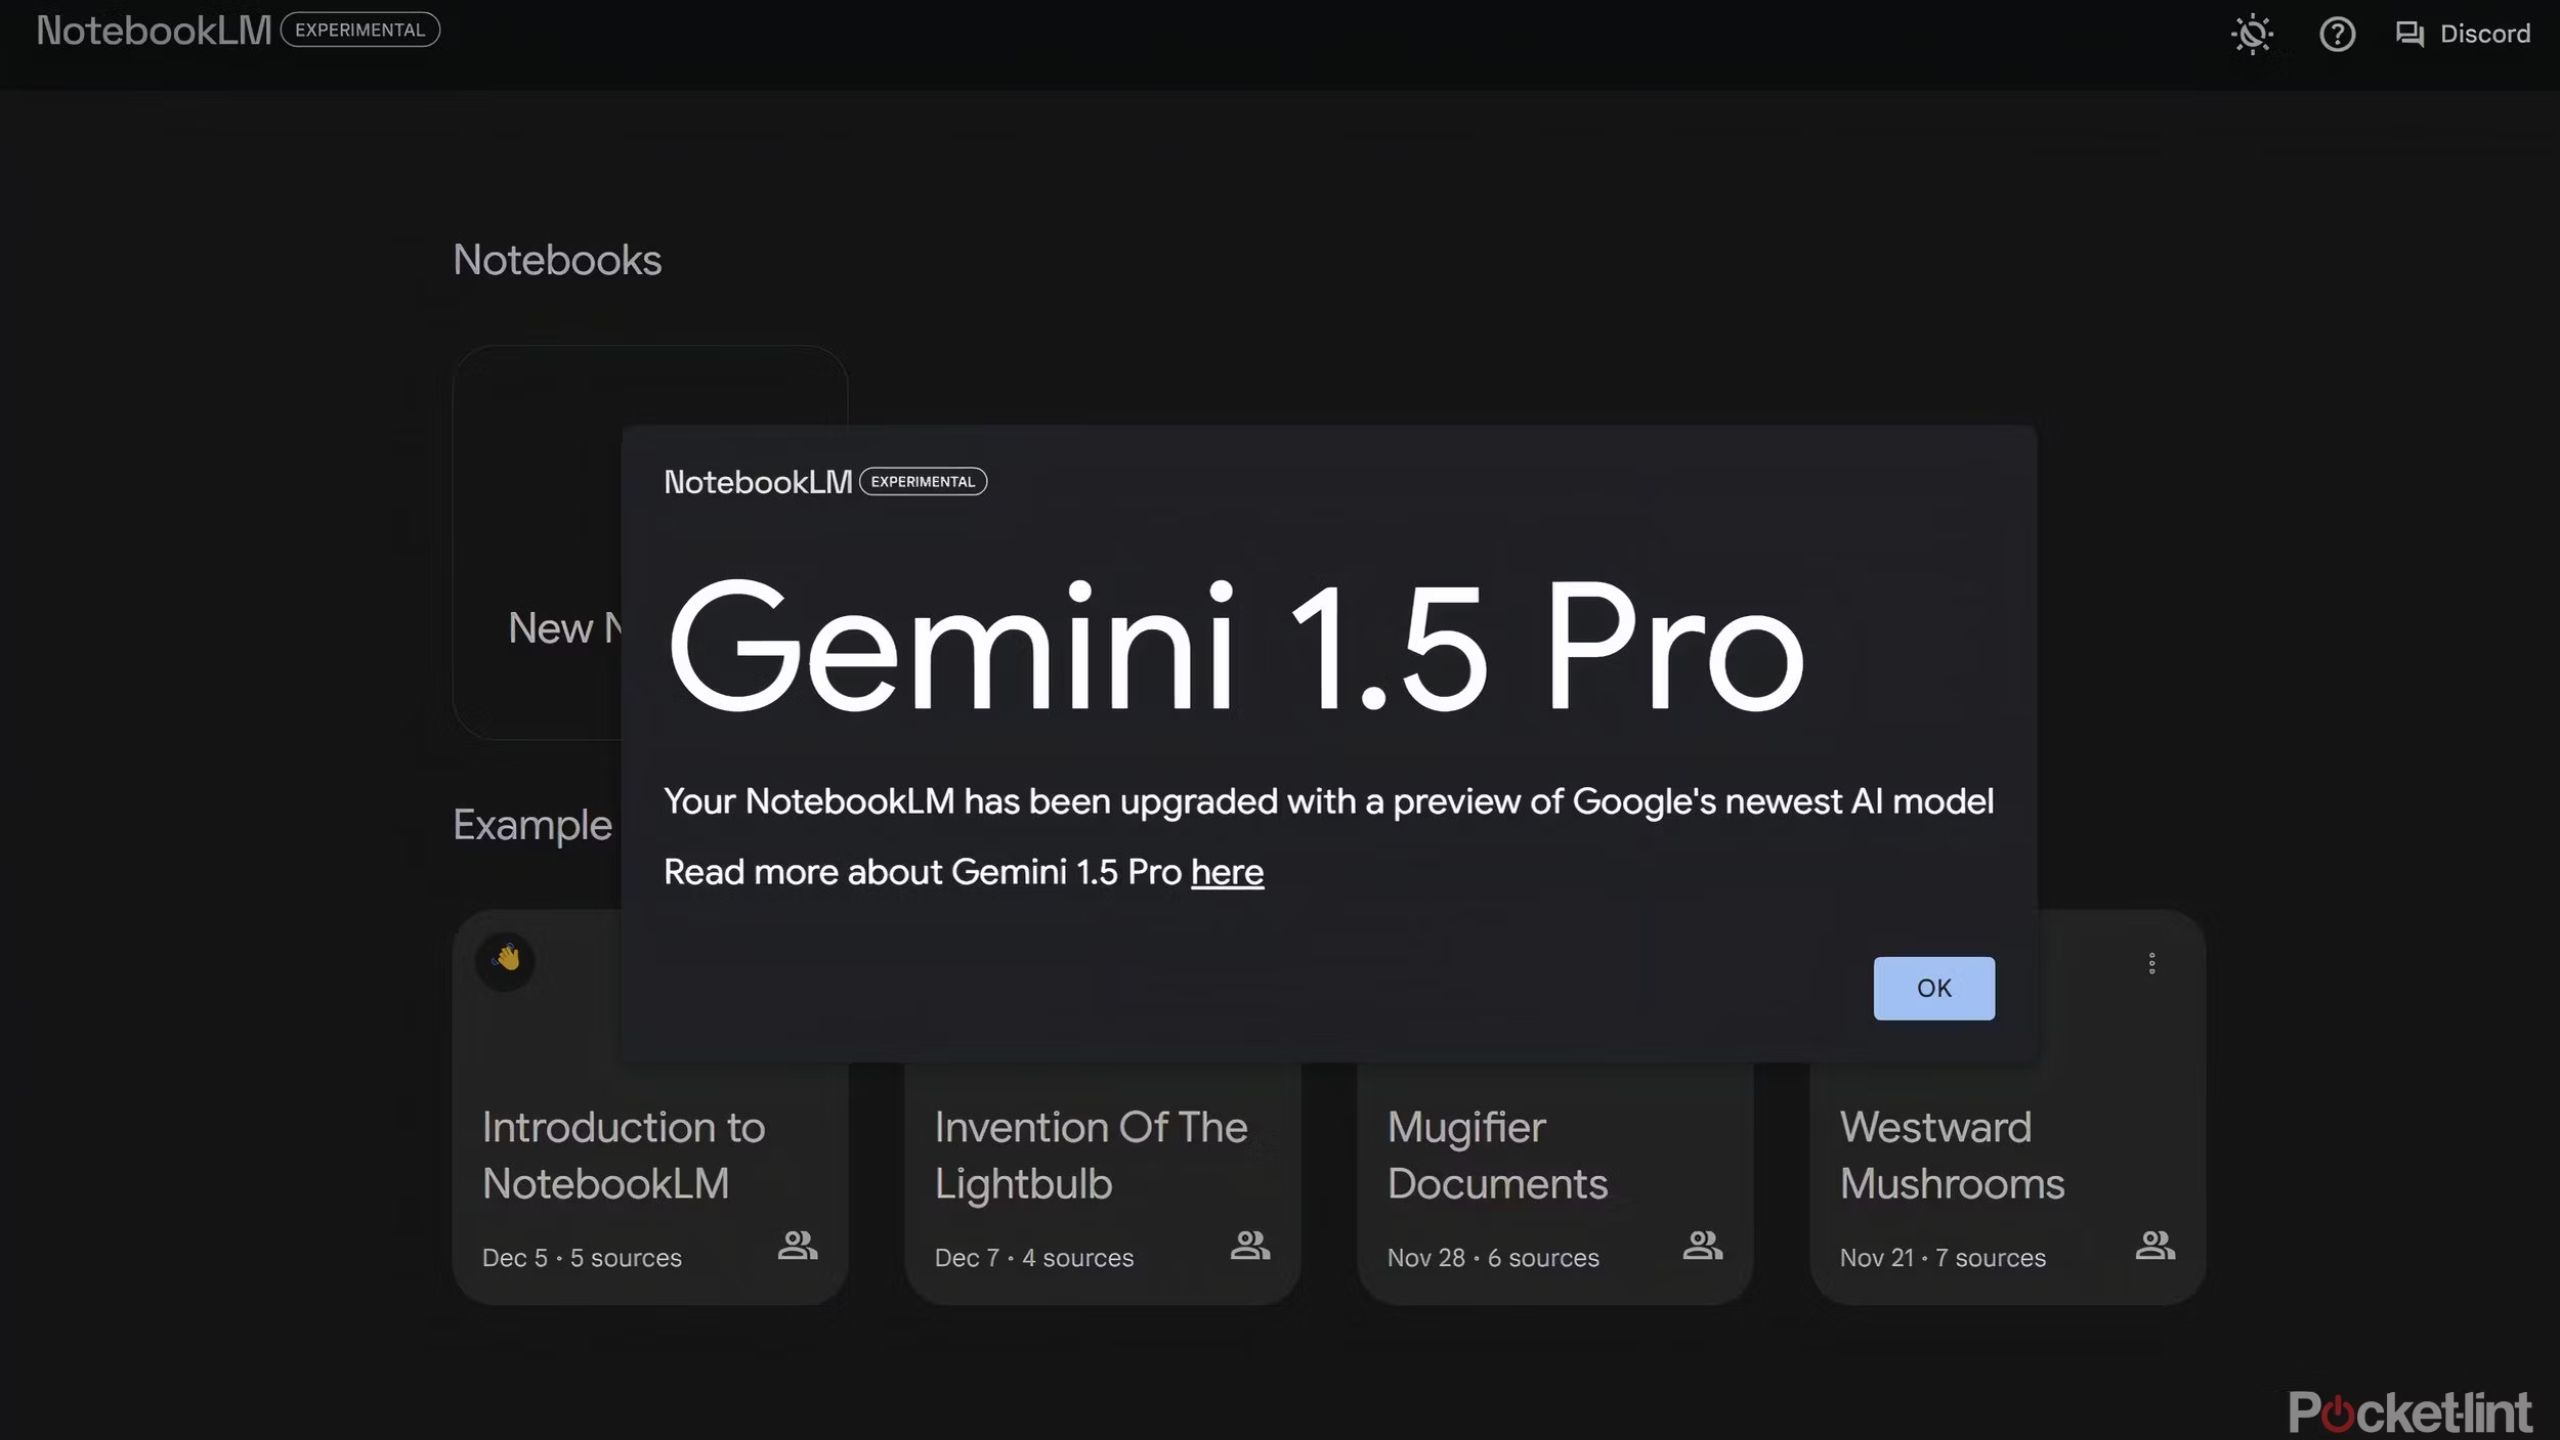 NotebookLM with Gemini 1.5 Pro in dark mode